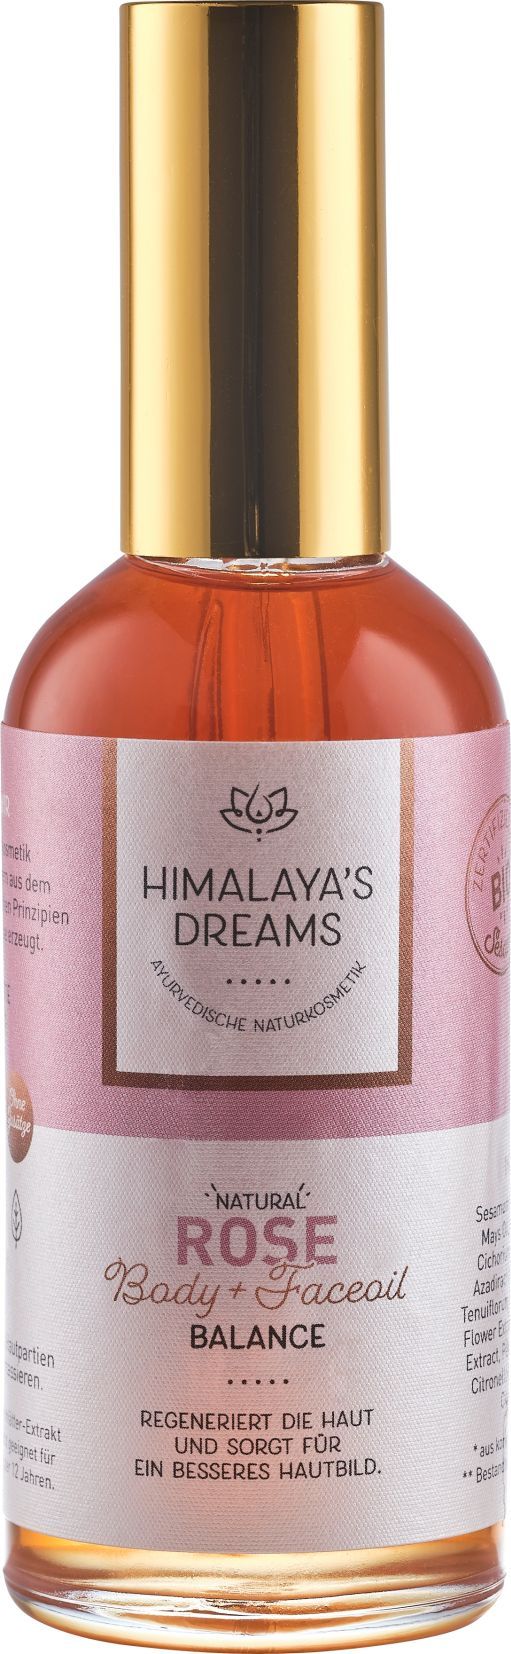 Himalaya's Dreams Ayurveda Rose Body & Face Oil